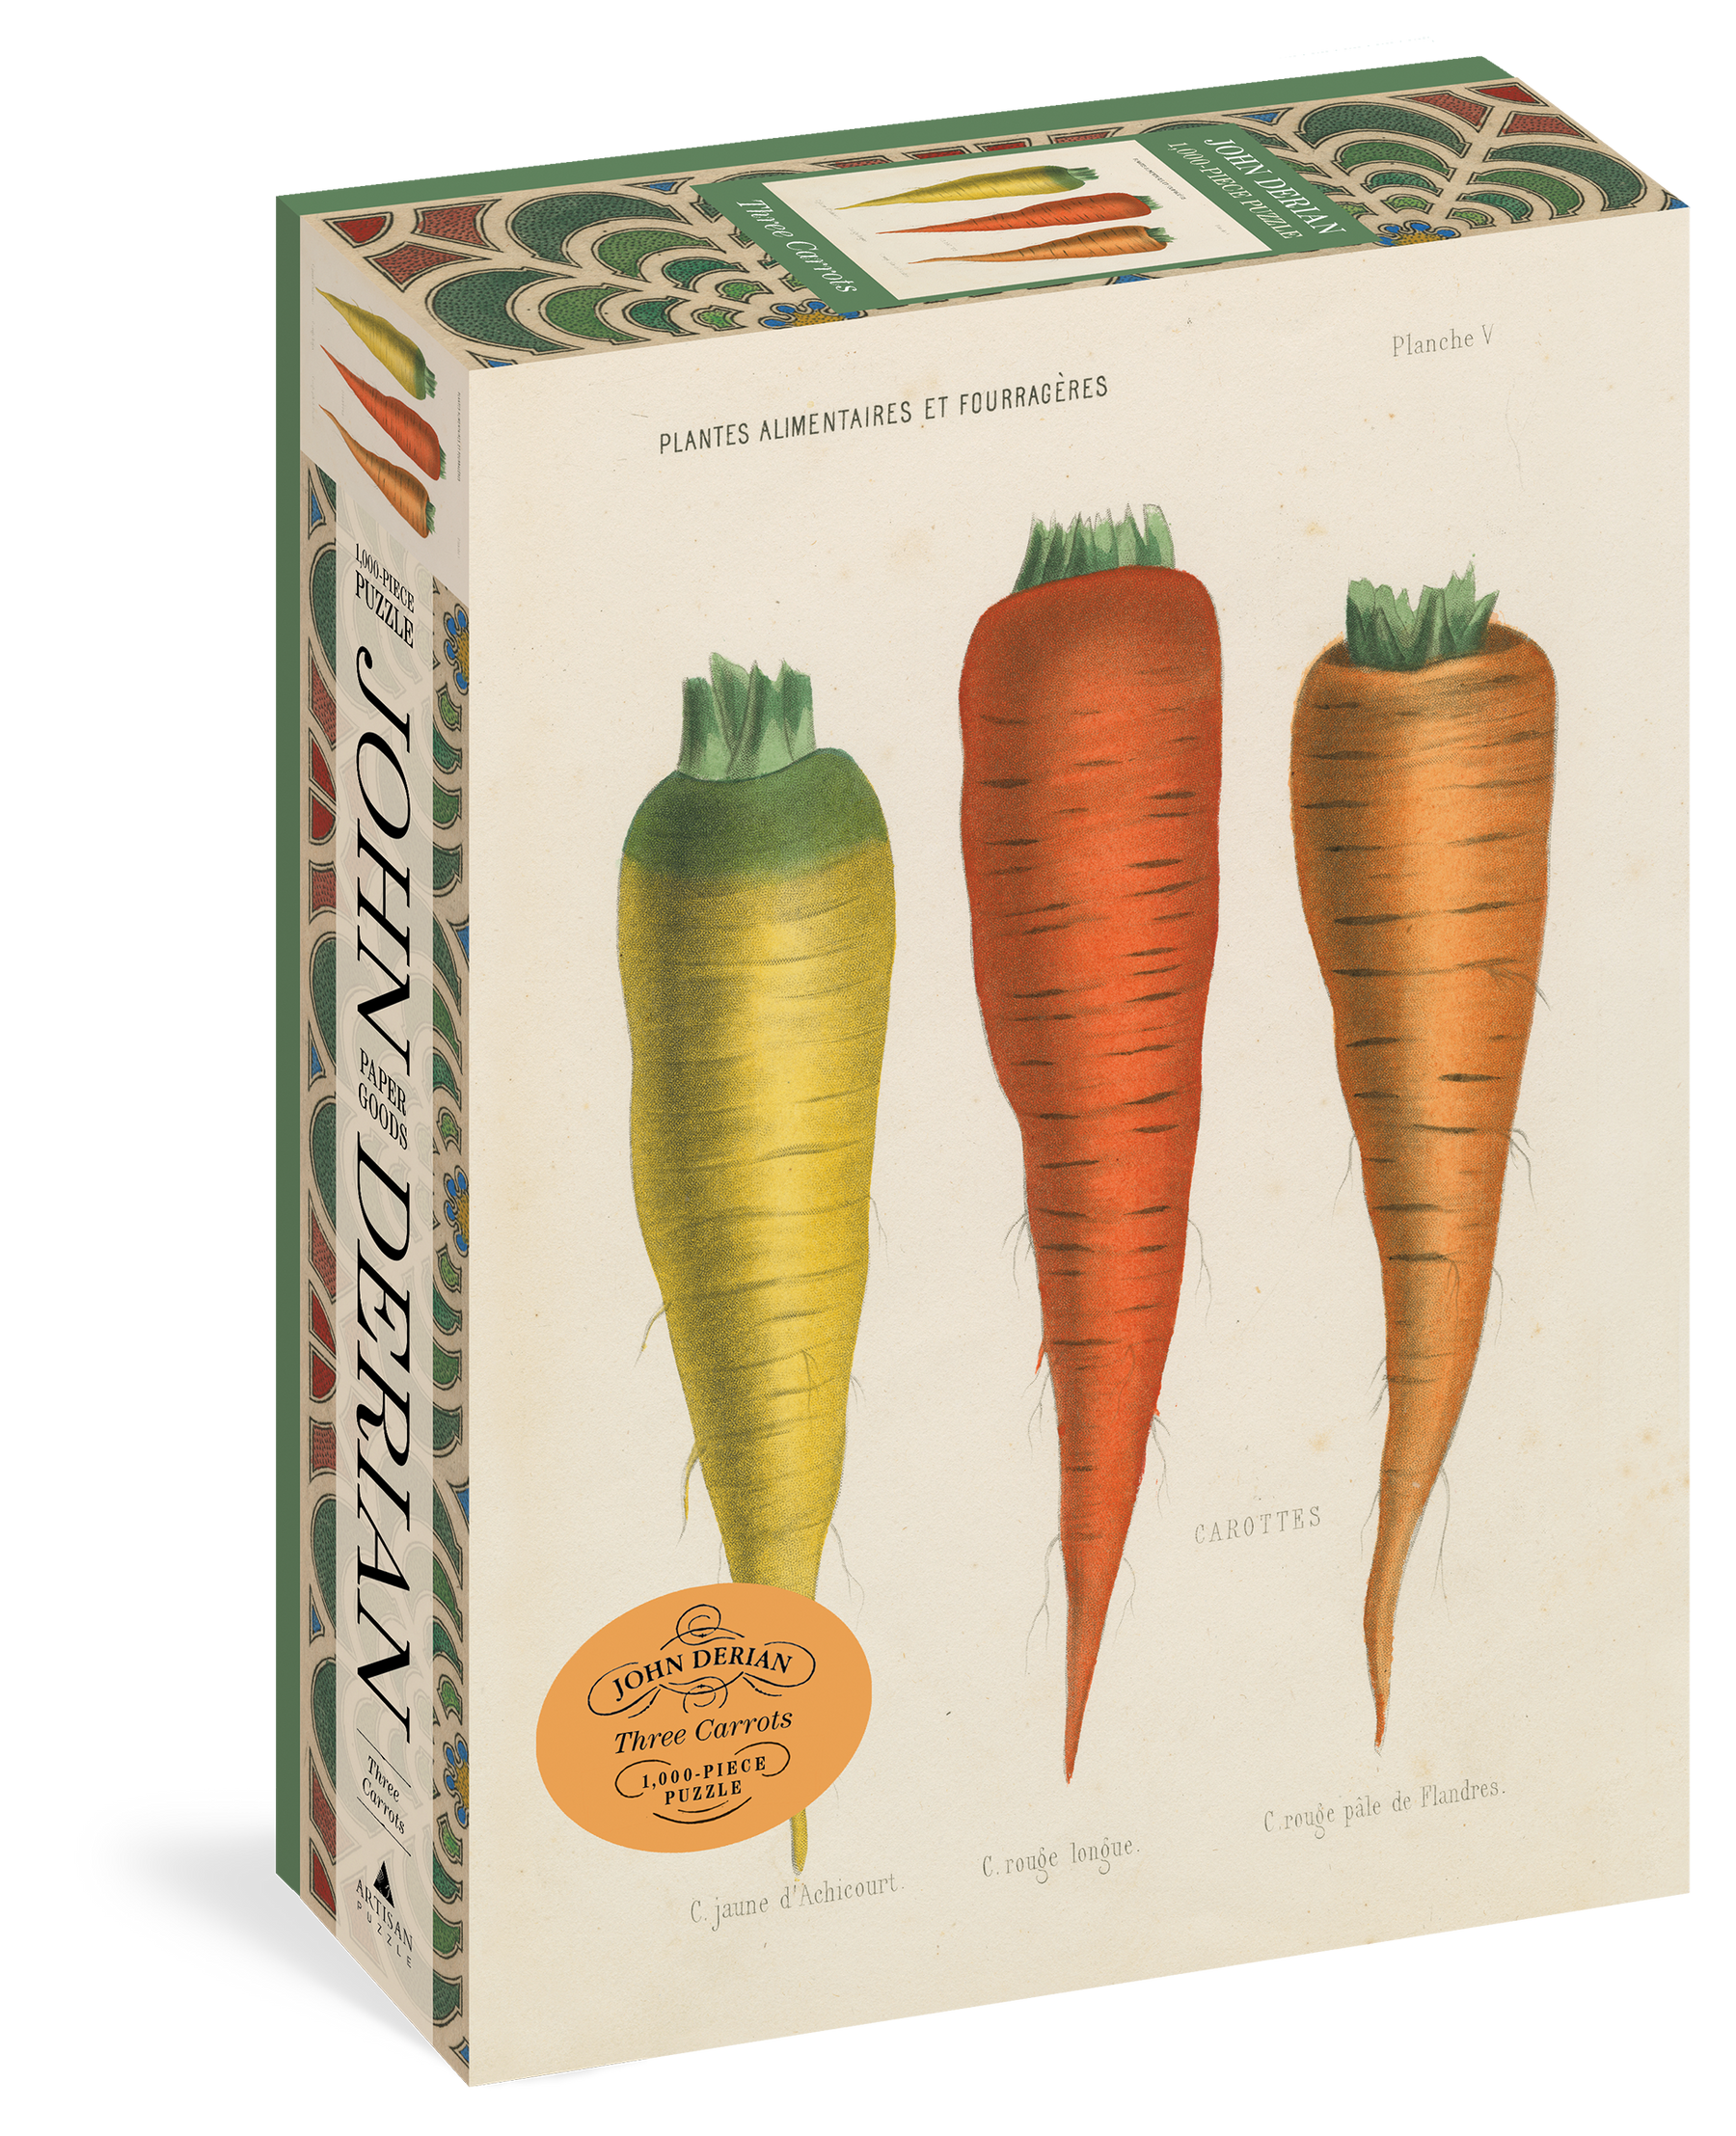 John Derian Paper Goods: Three Carrots Puzzle